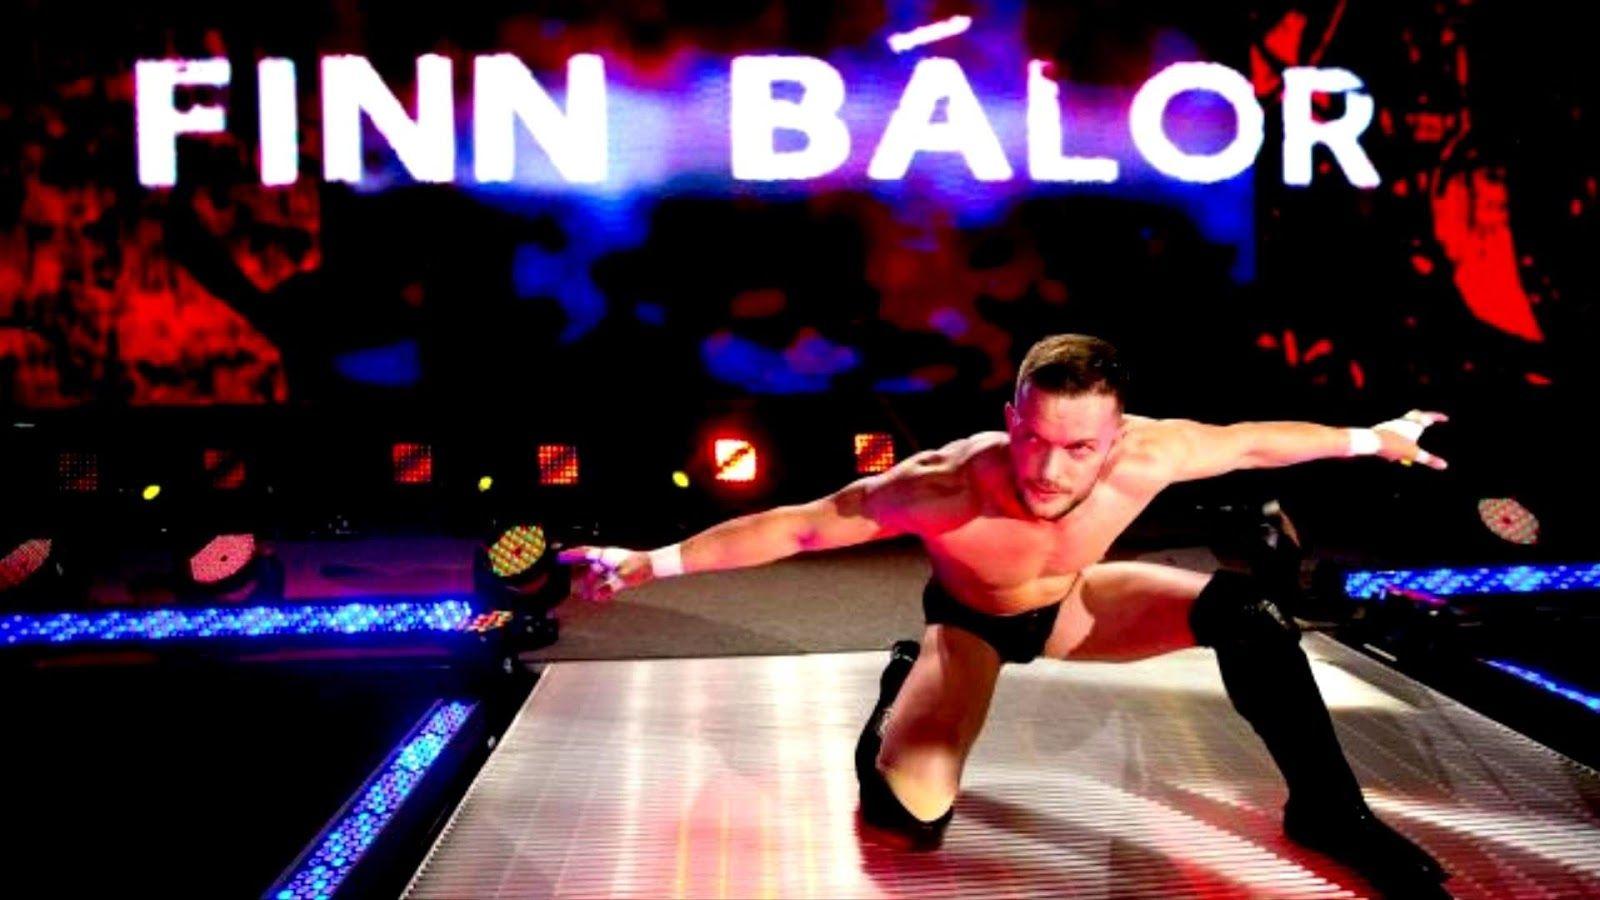 Download WWE Finn Balor HD Wallpaper and Photo